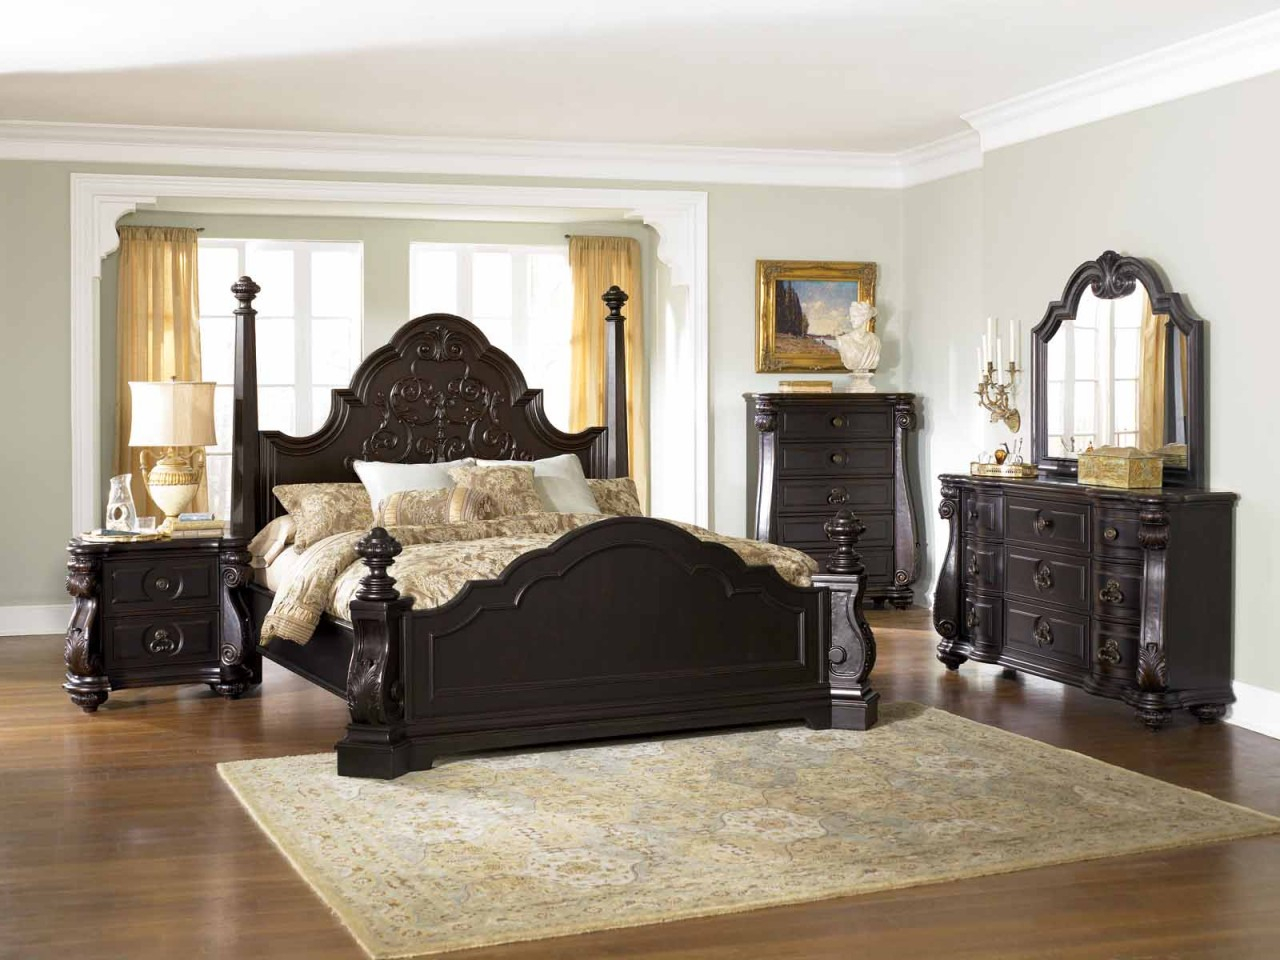 1950 Maple Bedroom Furniture Royals Courage Vintage Bedroom regarding sizing 1280 X 960